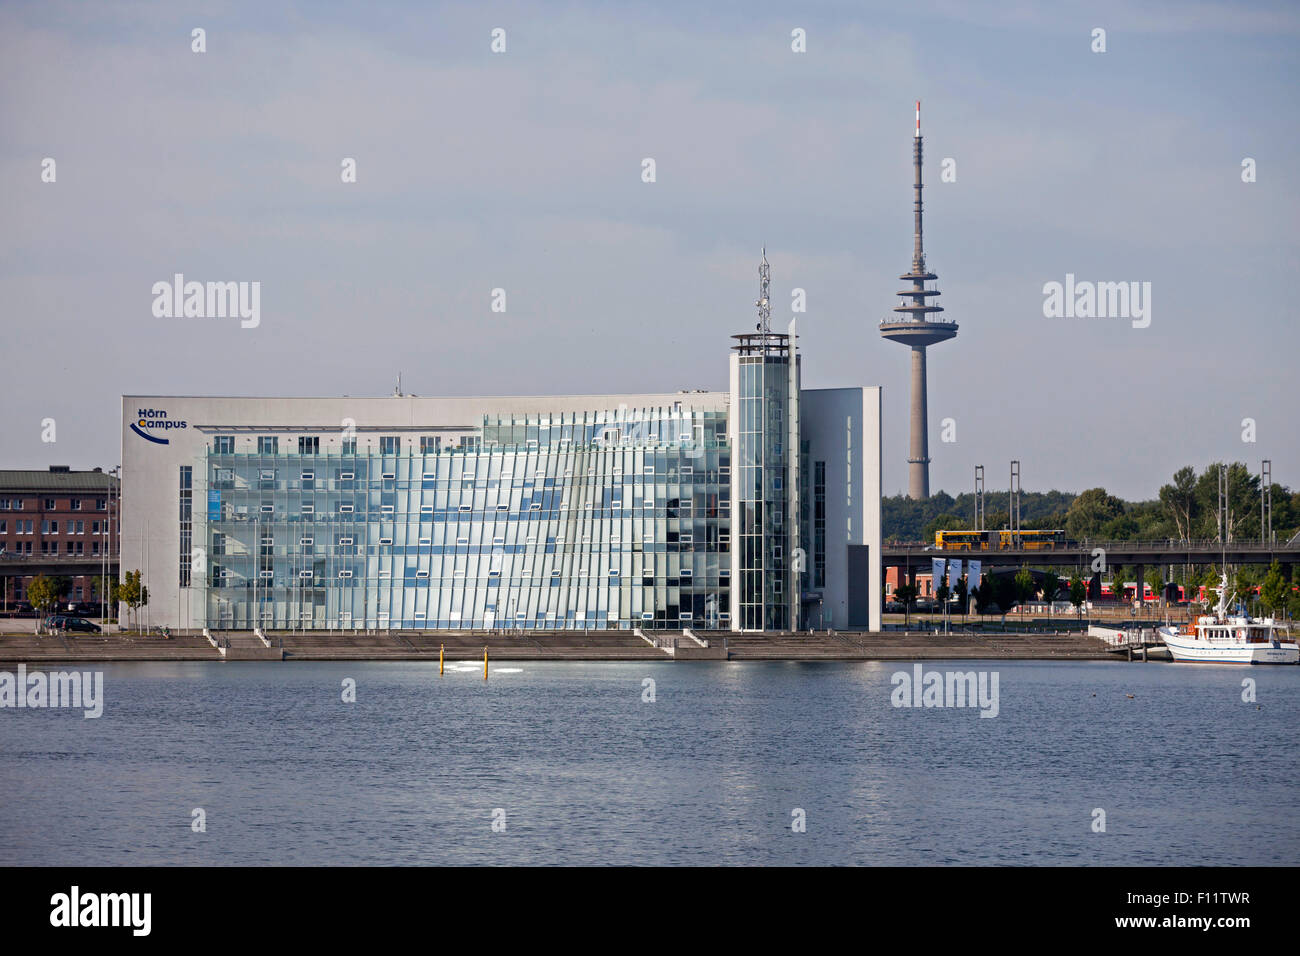 Hörn-Campus Building, Communication Tower  and Kiel Fjord, Kiel, Schleswig-Holstein, Germany Stock Photo